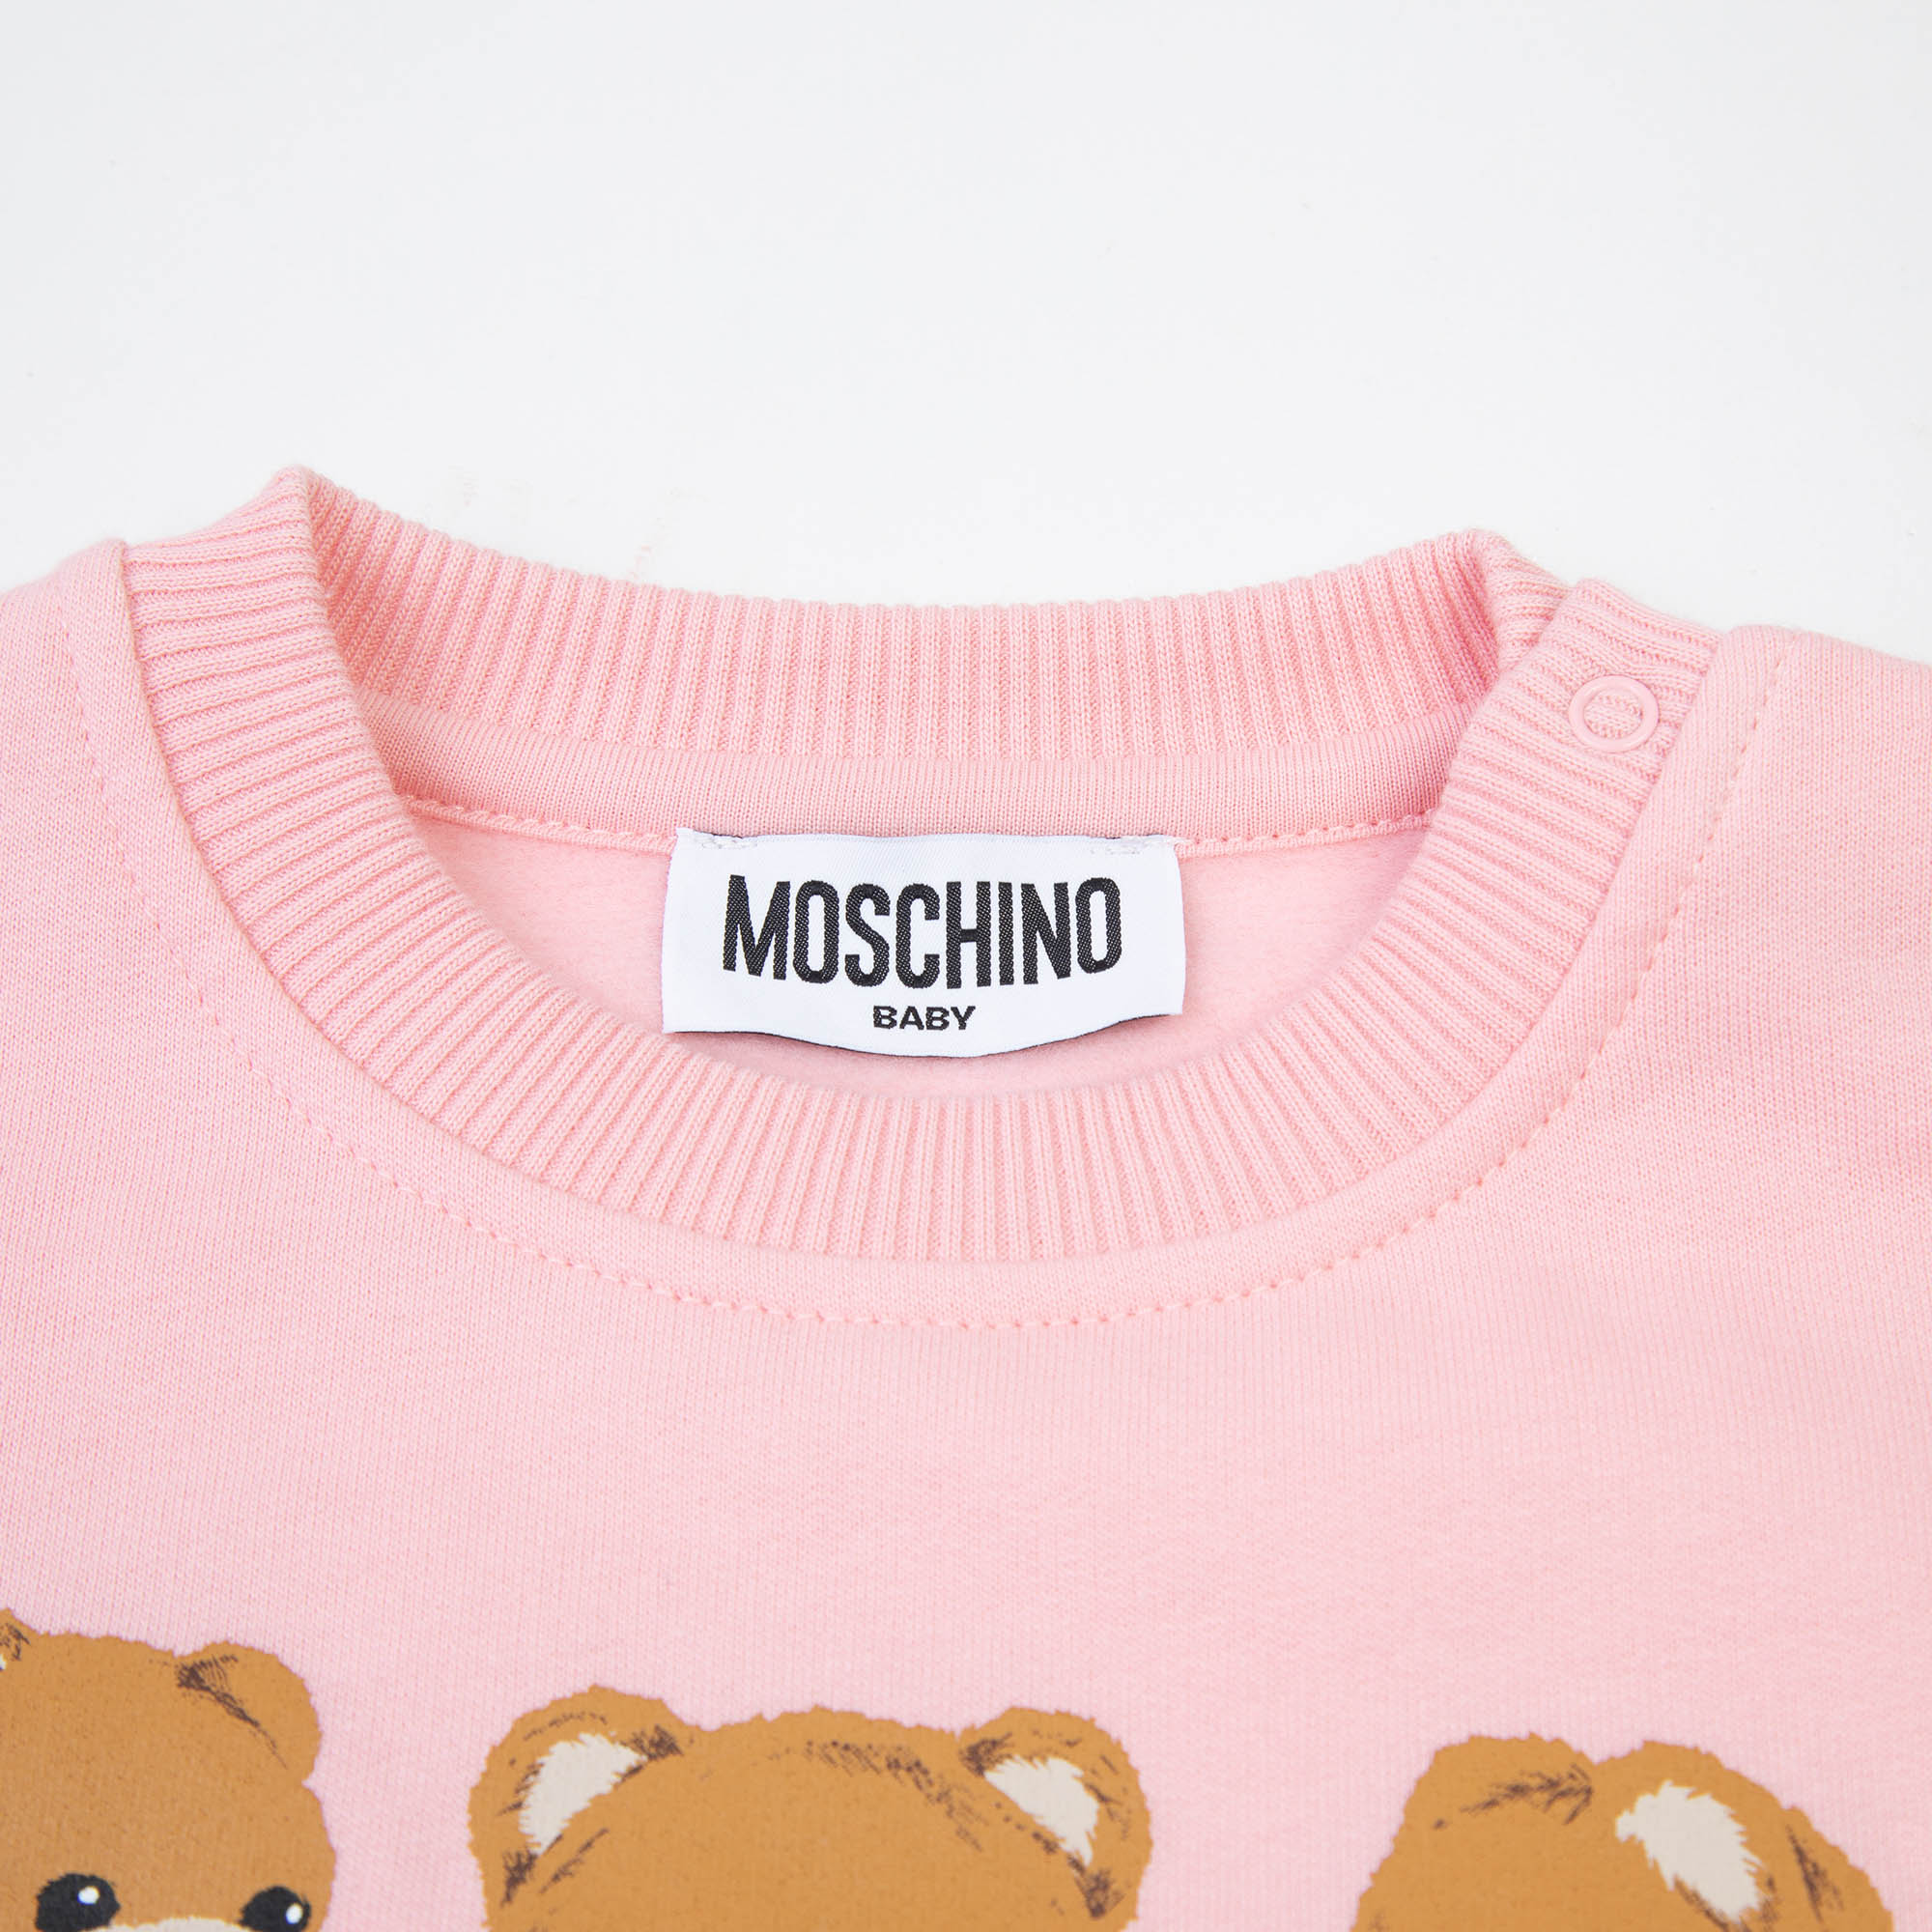 Baby Boys & Girls Pink Printed Cotton Sweatshirt